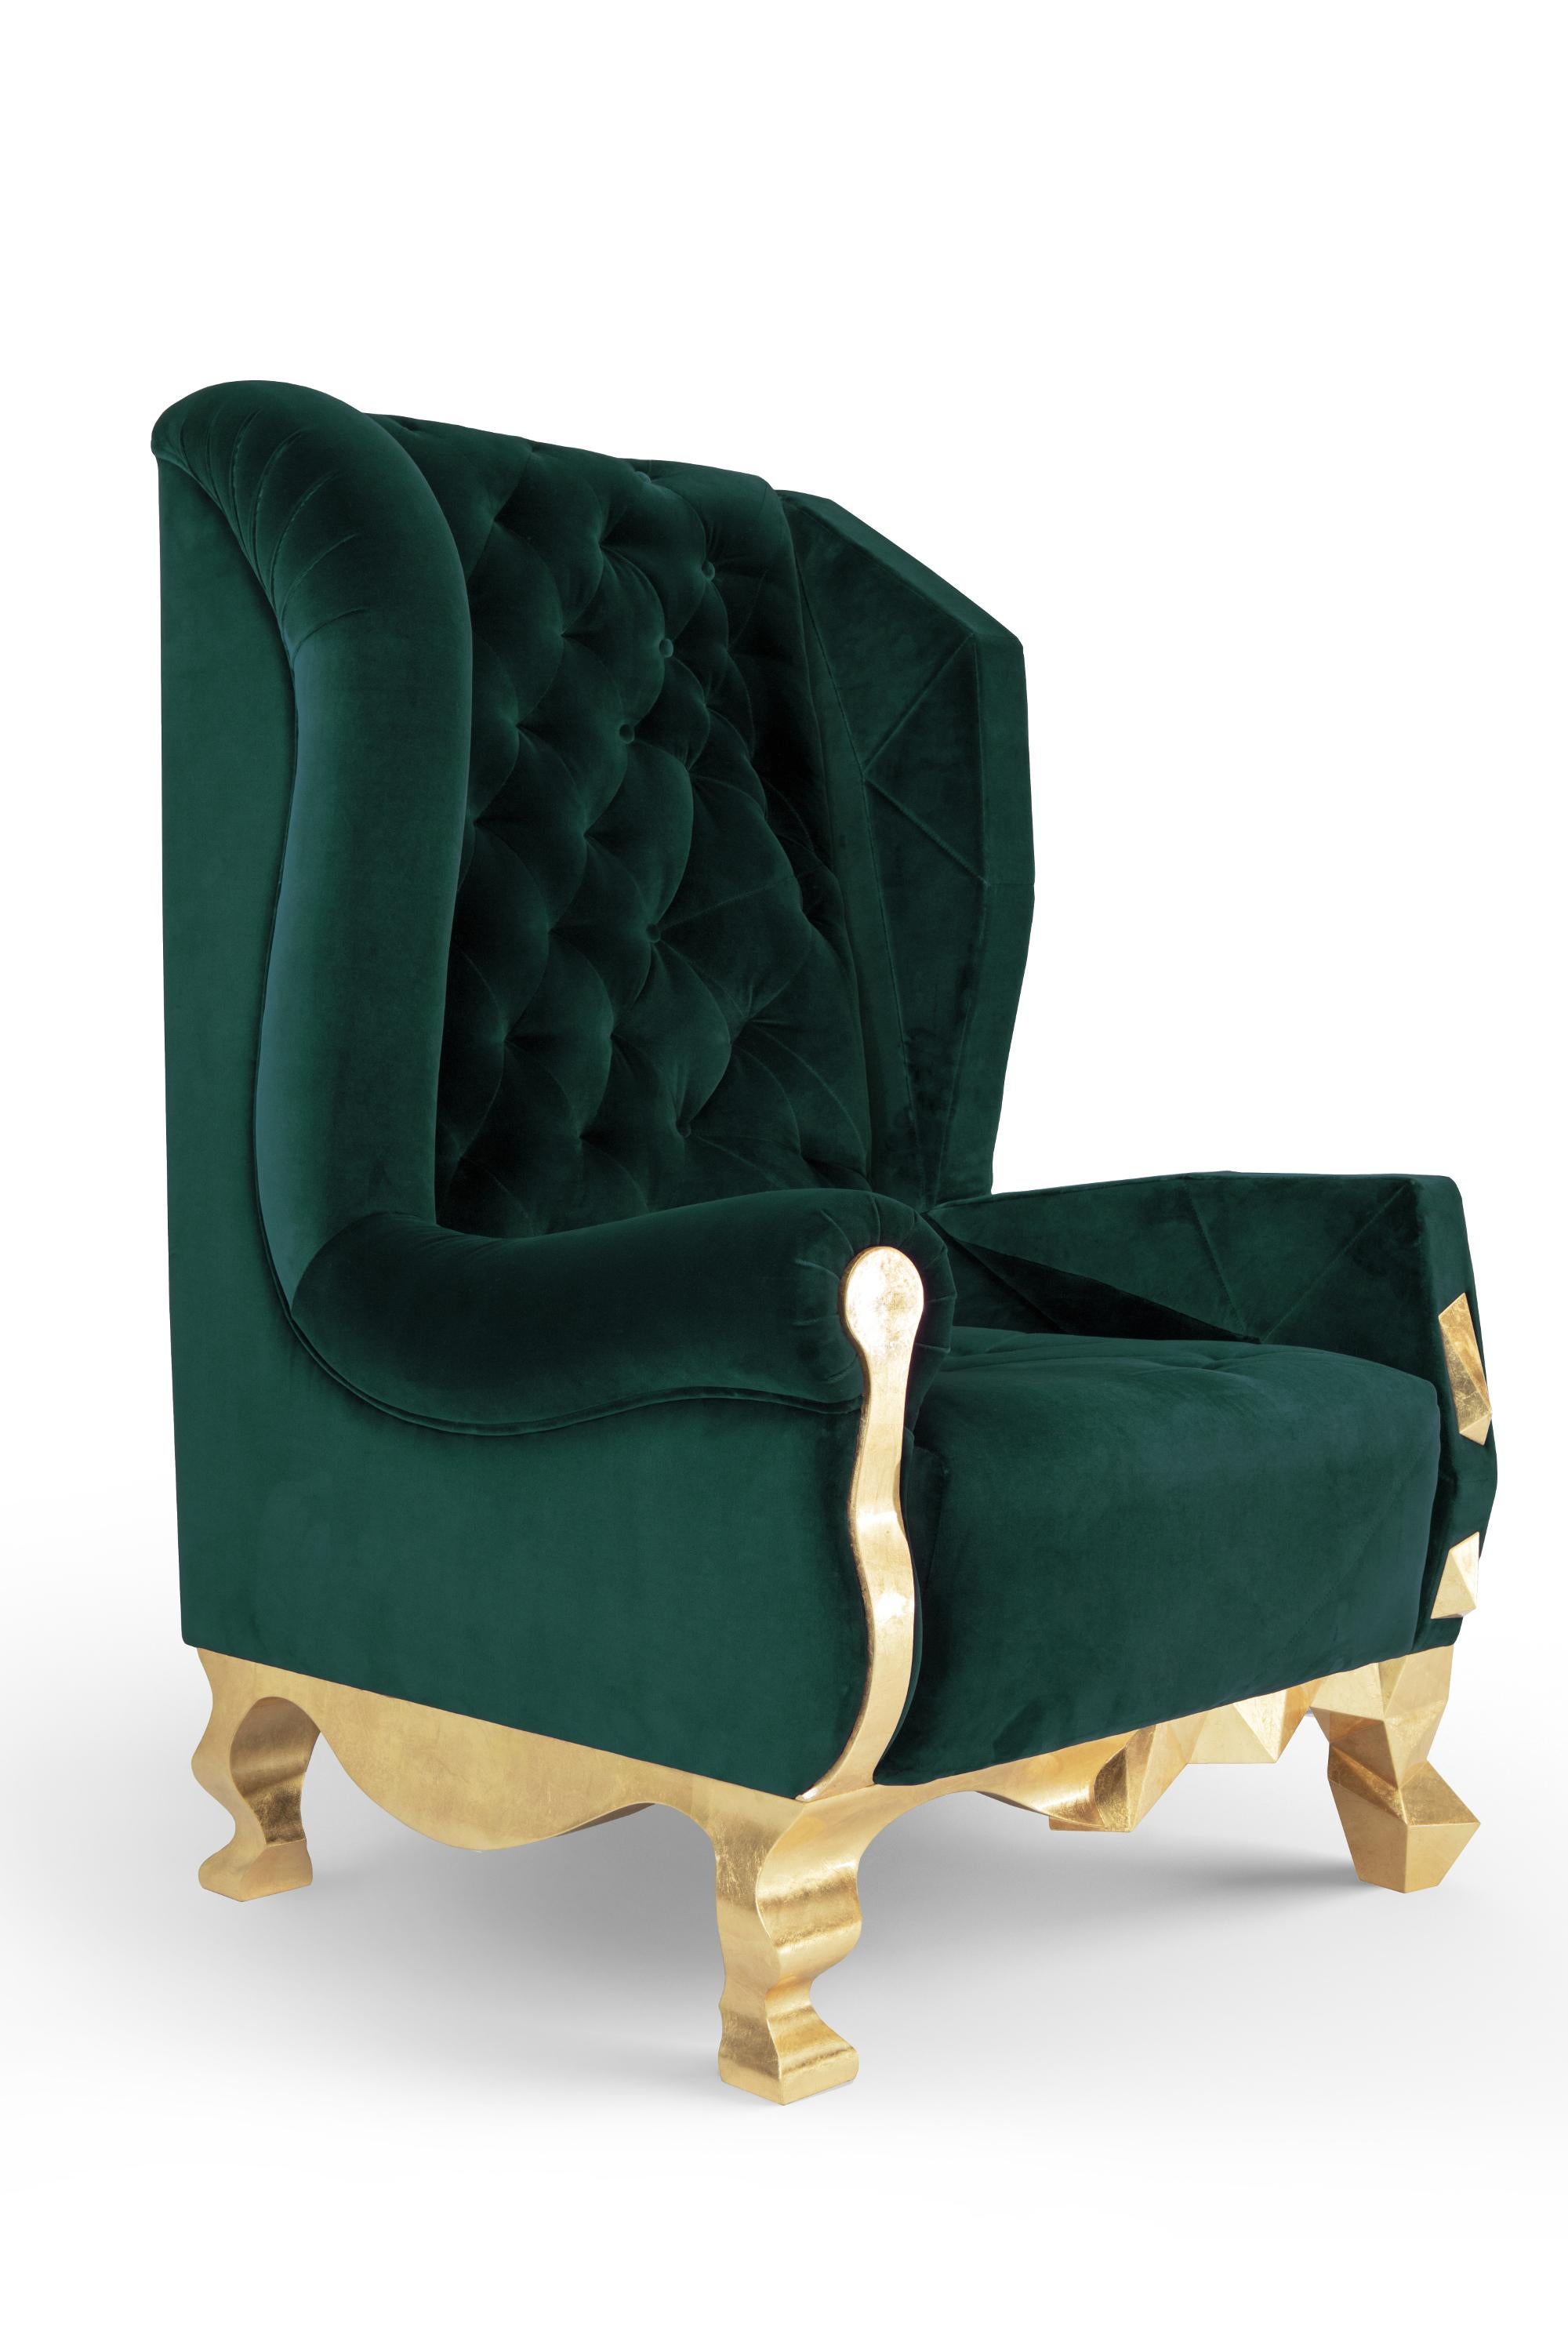 royal green chair